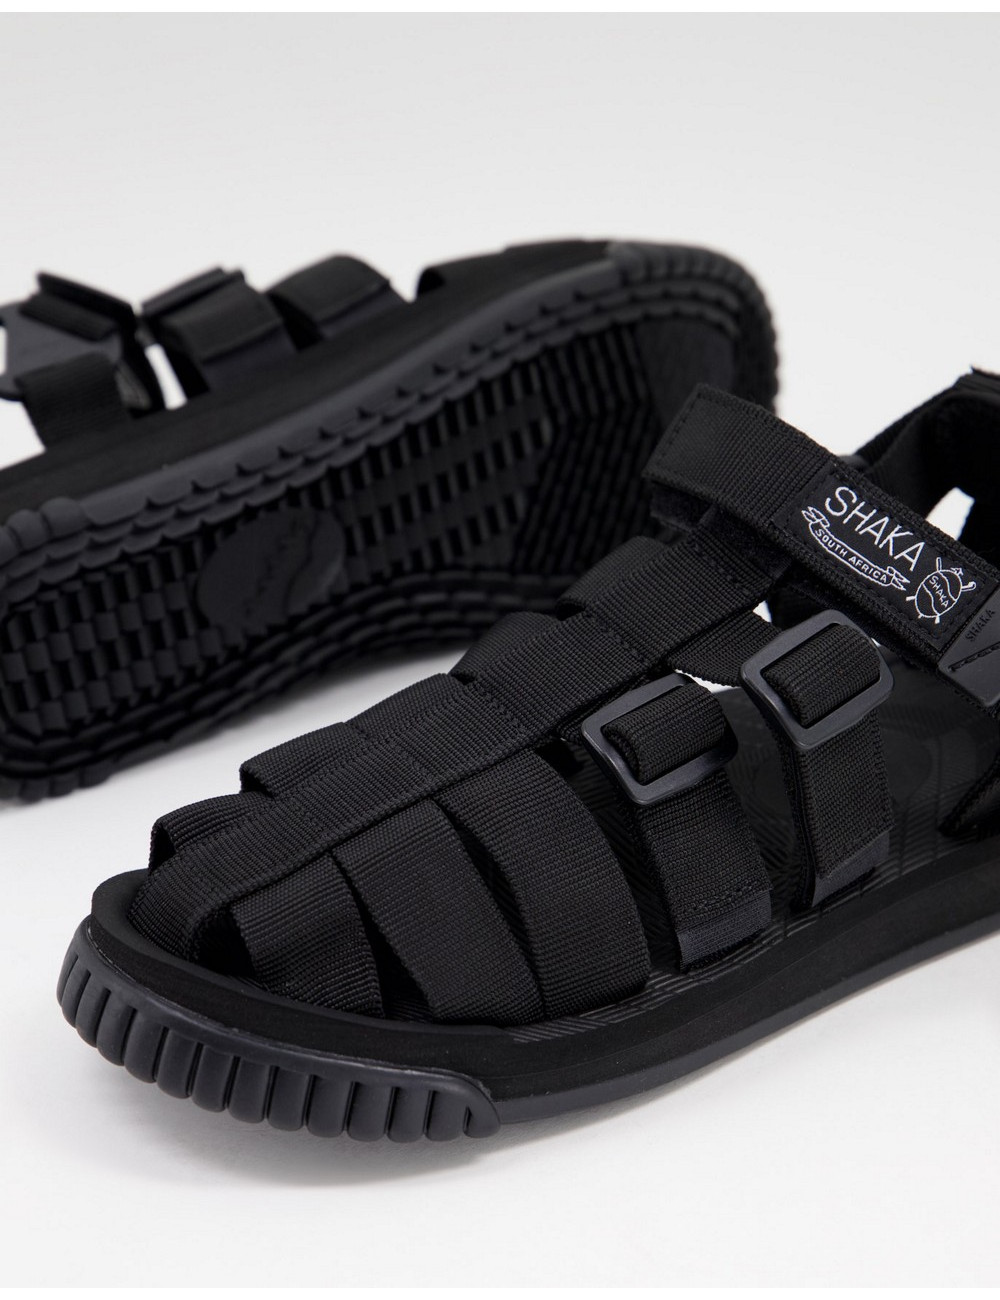 Shaka hiker sandals in black